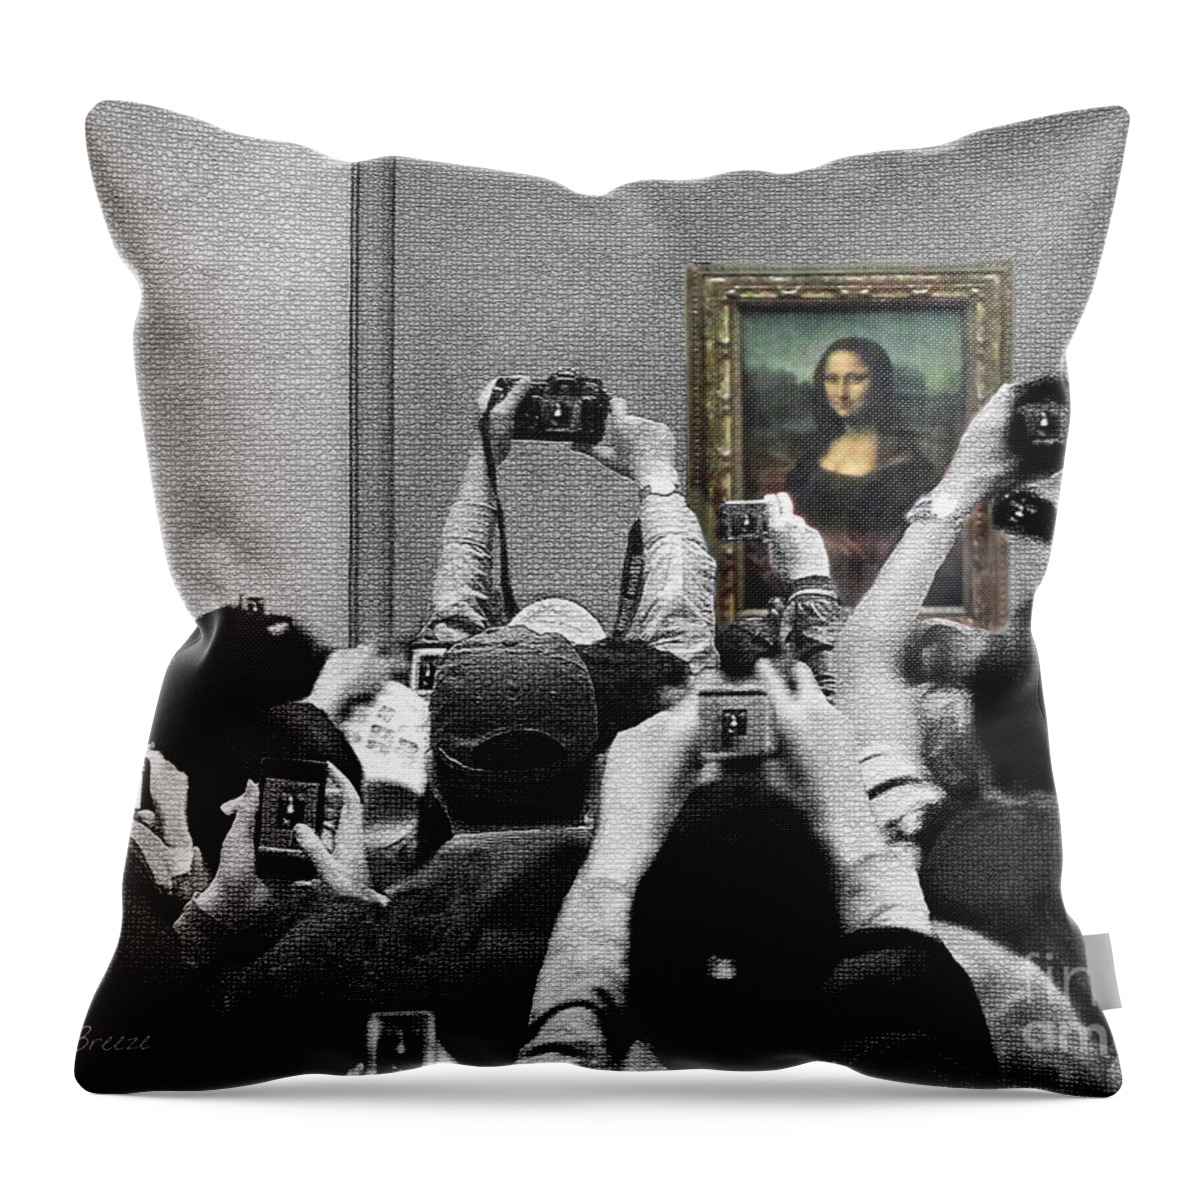 Historical Throw Pillow featuring the digital art Papararzzi Superstar by Jennie Breeze